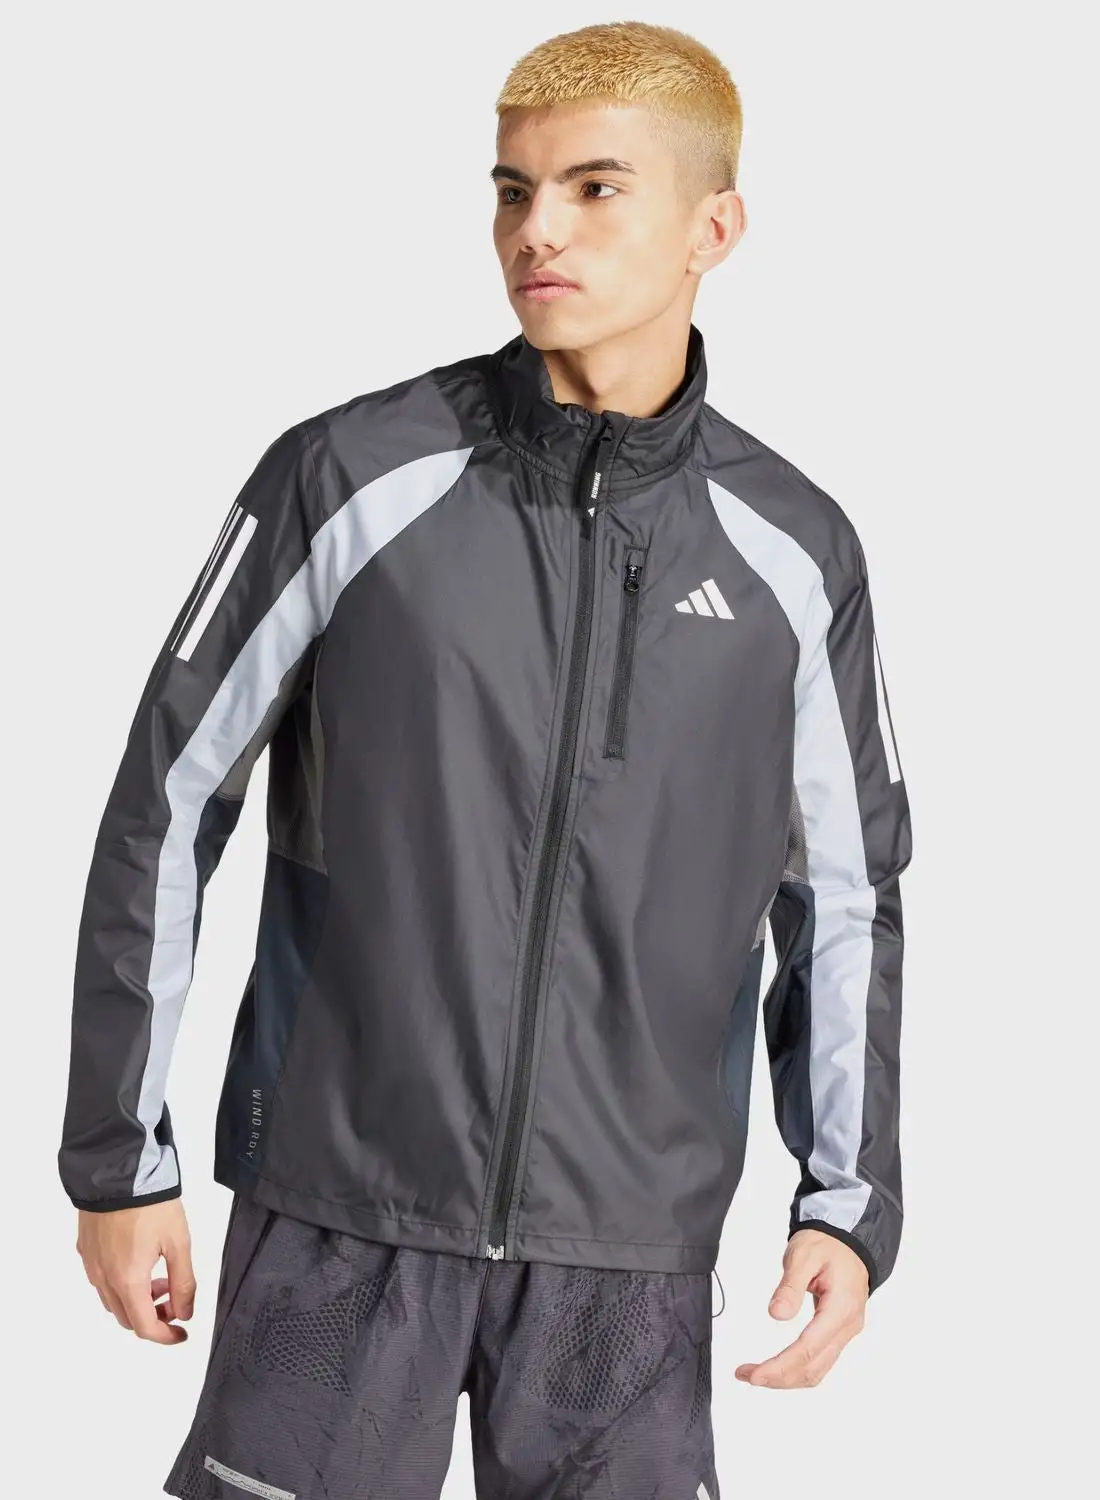 Adidas Own The Run Colorblock Jacket